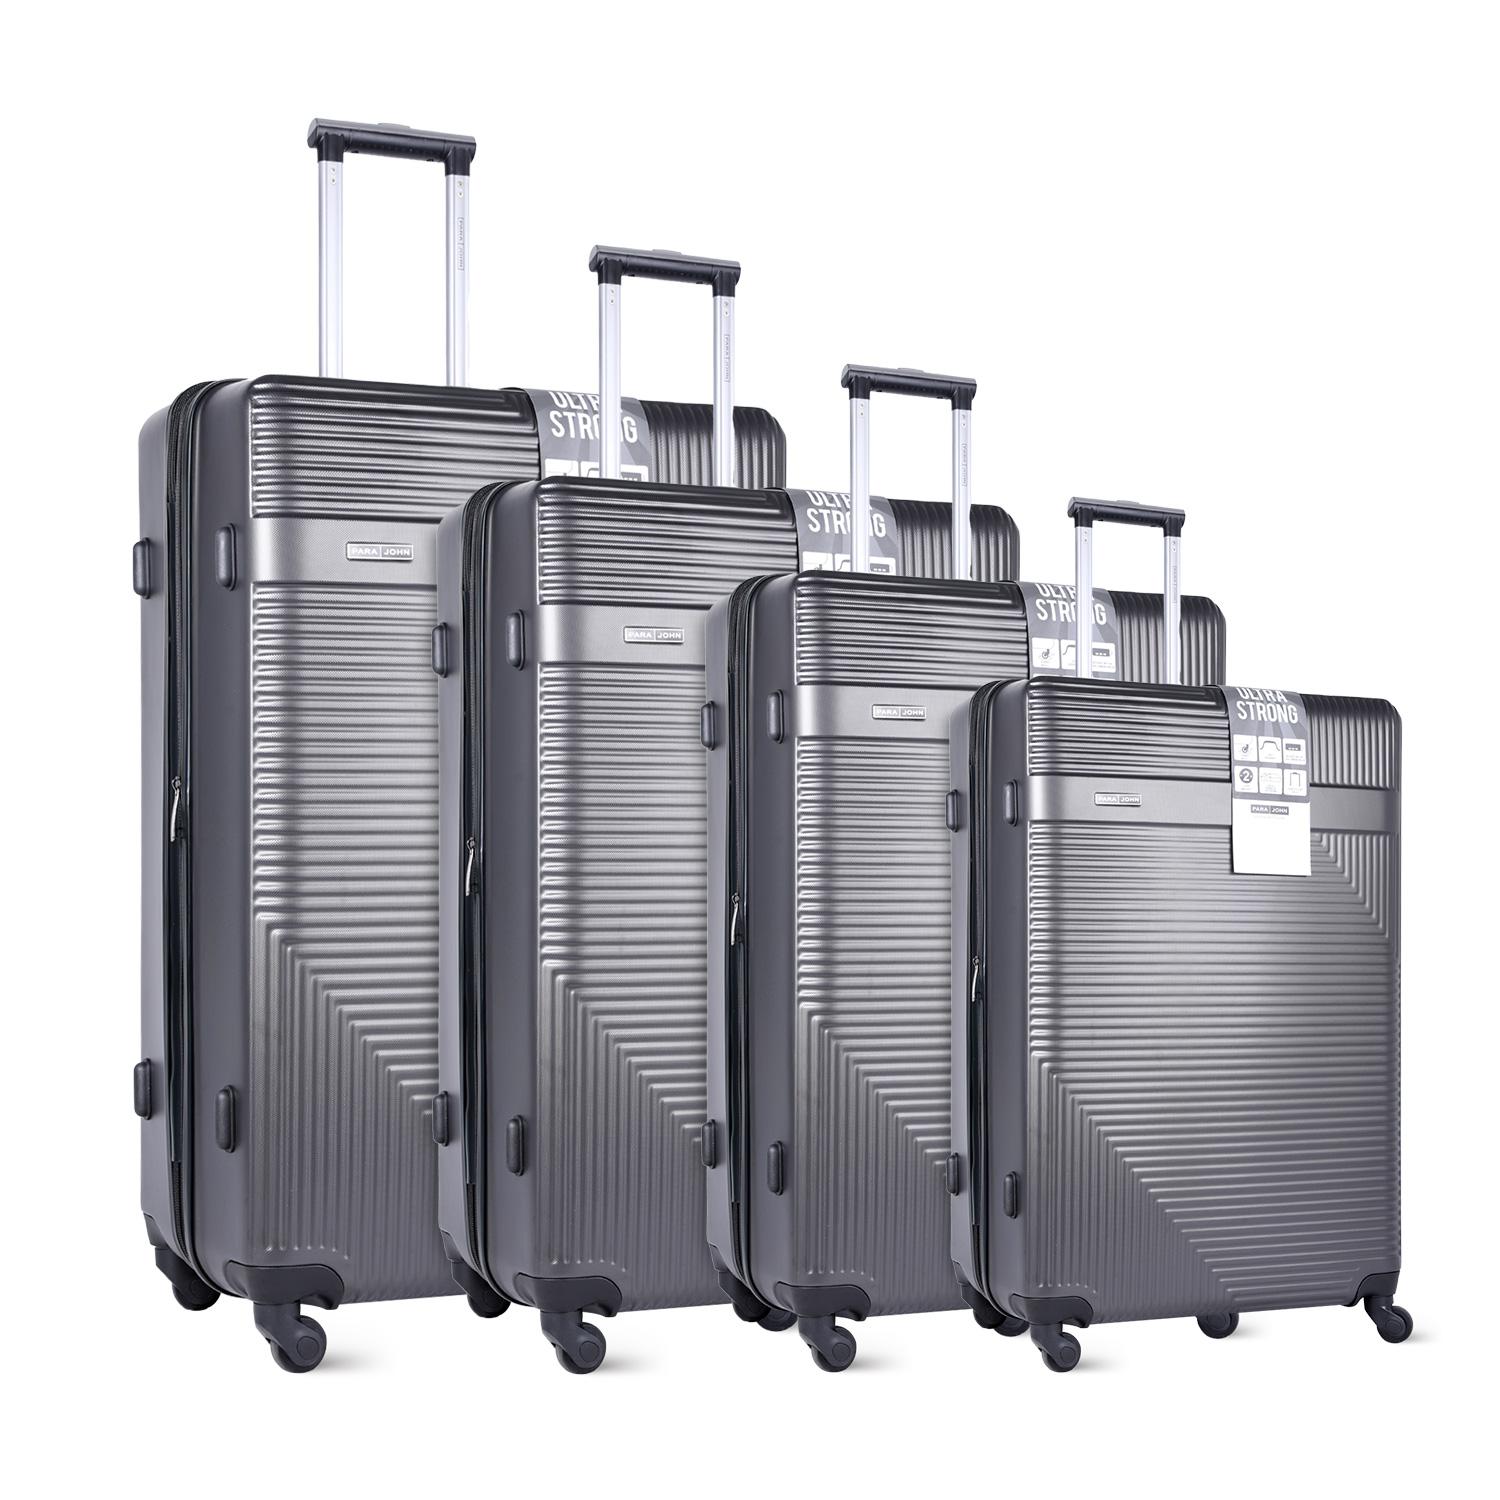 طقم حقائب سفر بعجلات دوارة 4 حقائب (20 ، 24 ، 28 ، 32) بوصة مادة PVC أسود PARA JOHN – 4 Pcs Alle Trolley Luggage Set, Black